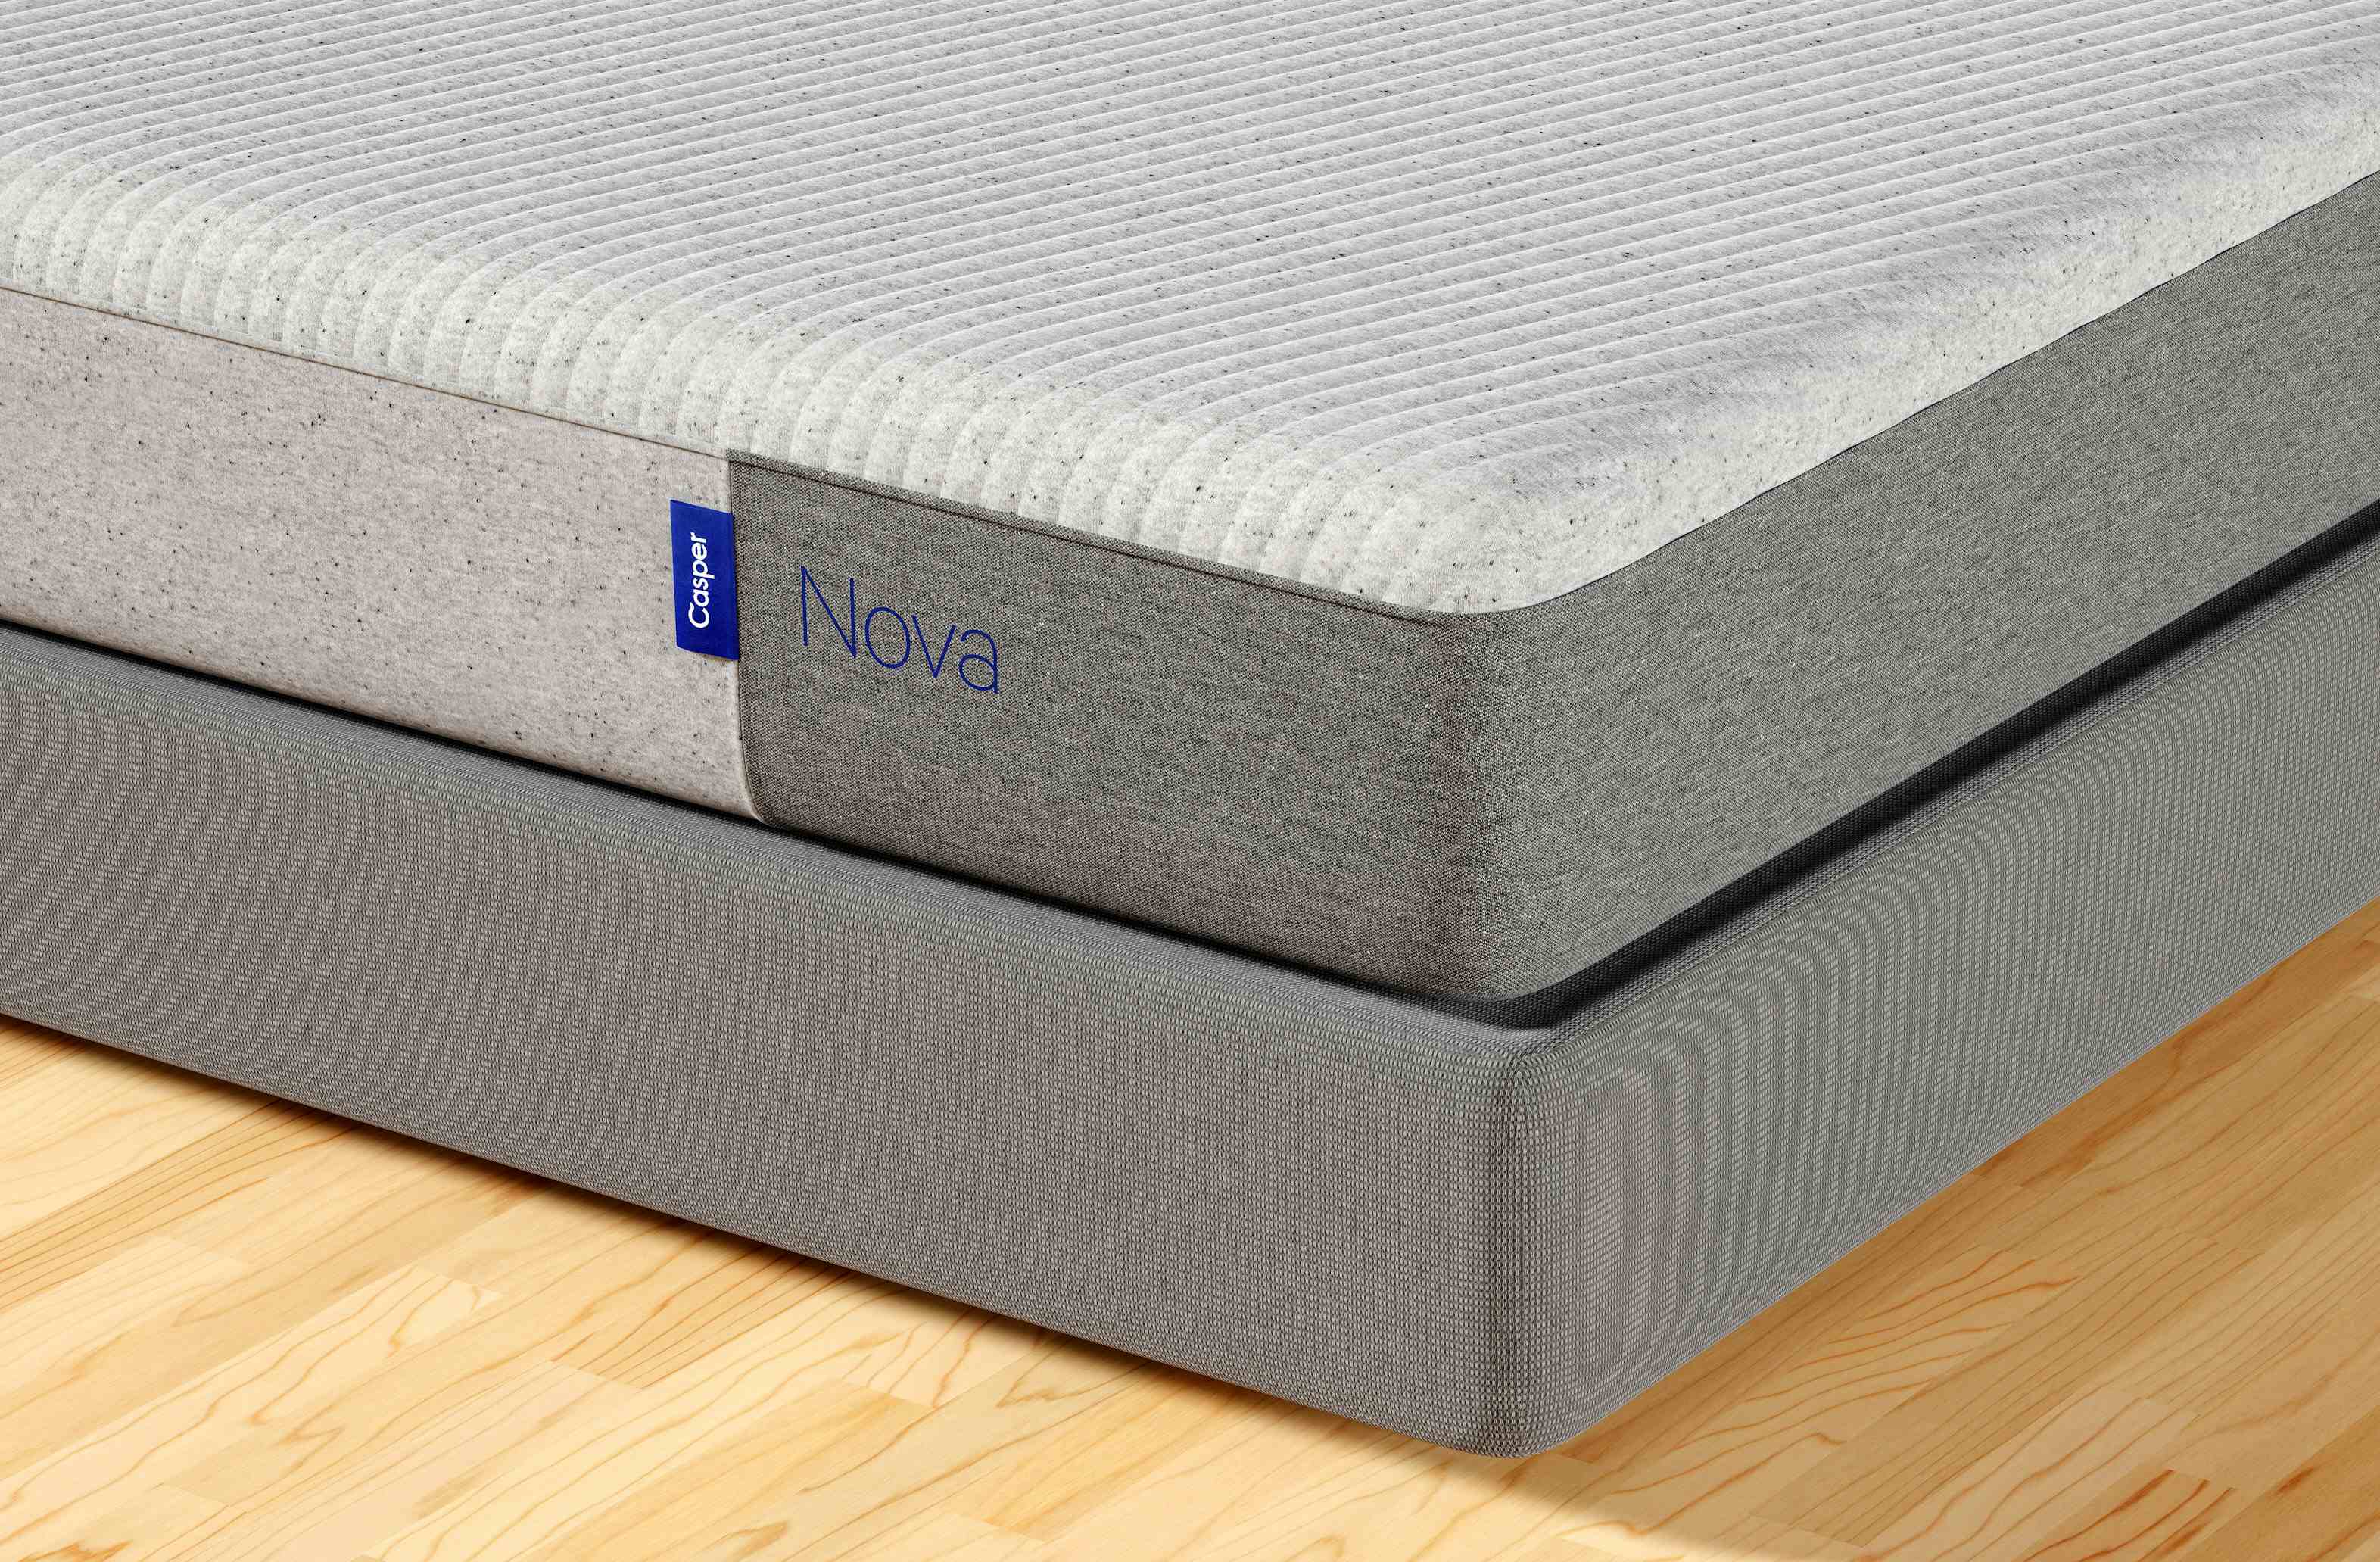 Corner of Casper Nova Foam mattress